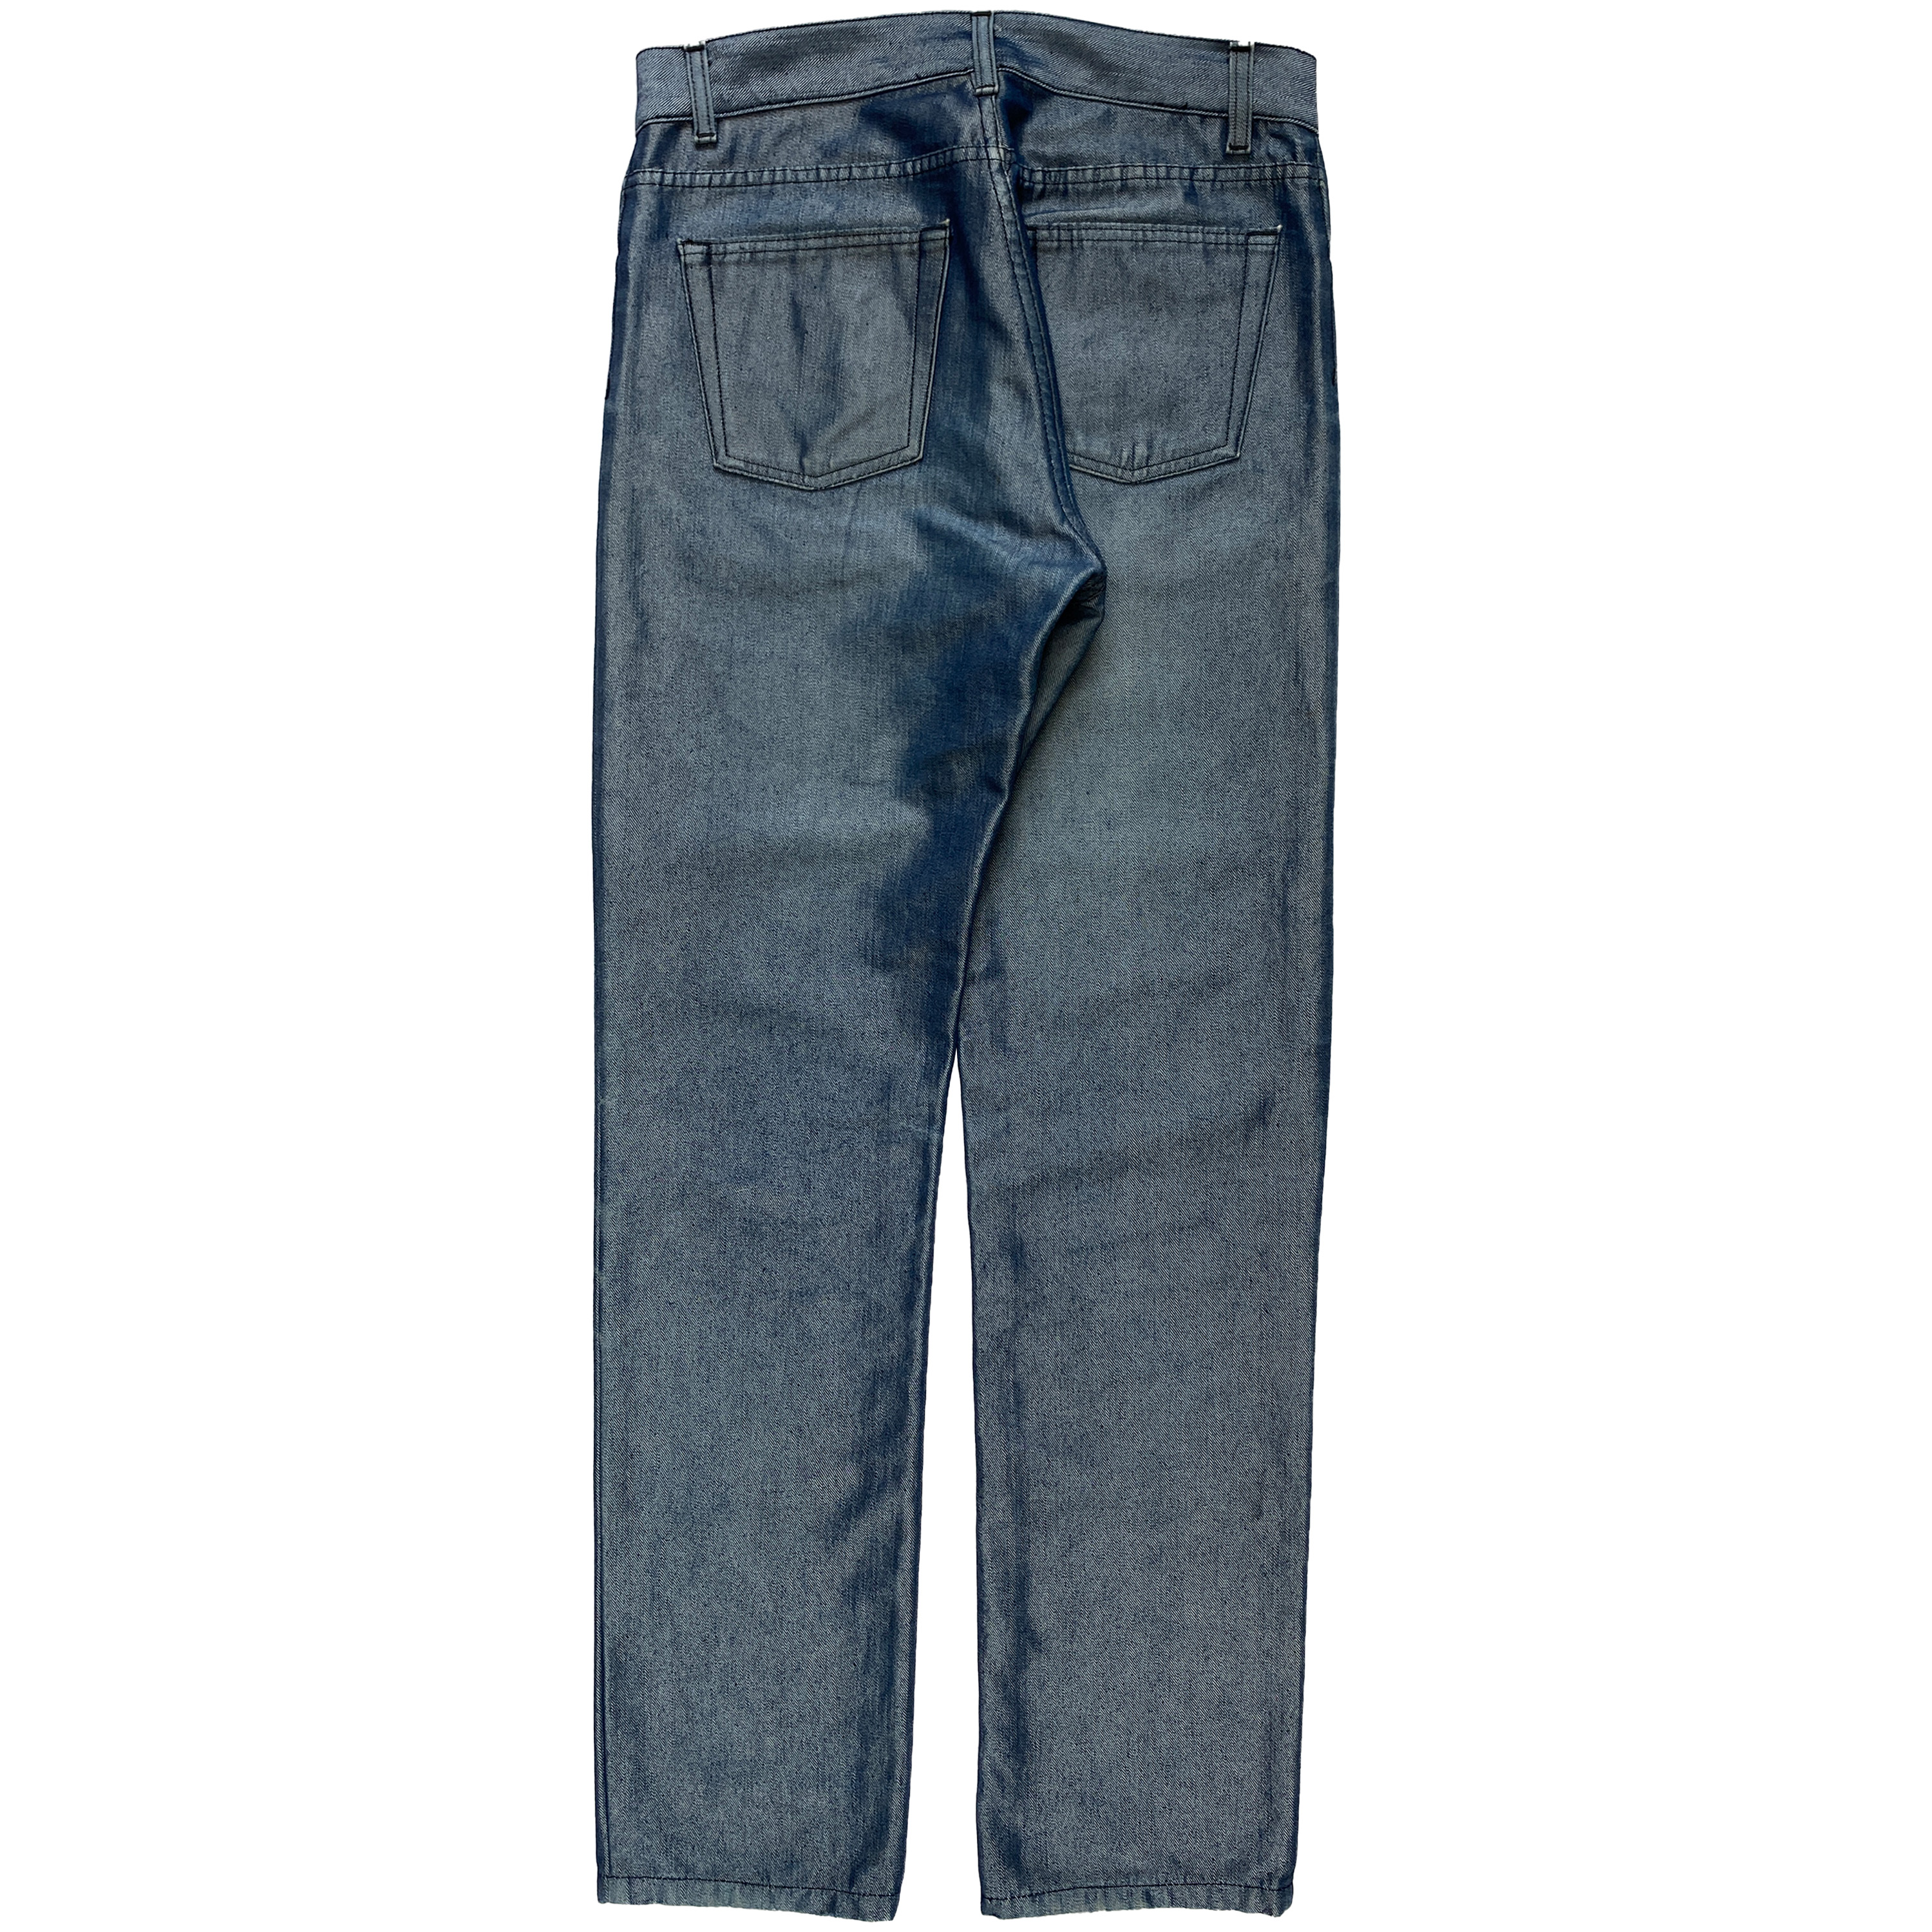 Helmut Lang, A/W 1997-98 Polypropylene Coated Denim Jeans - La 